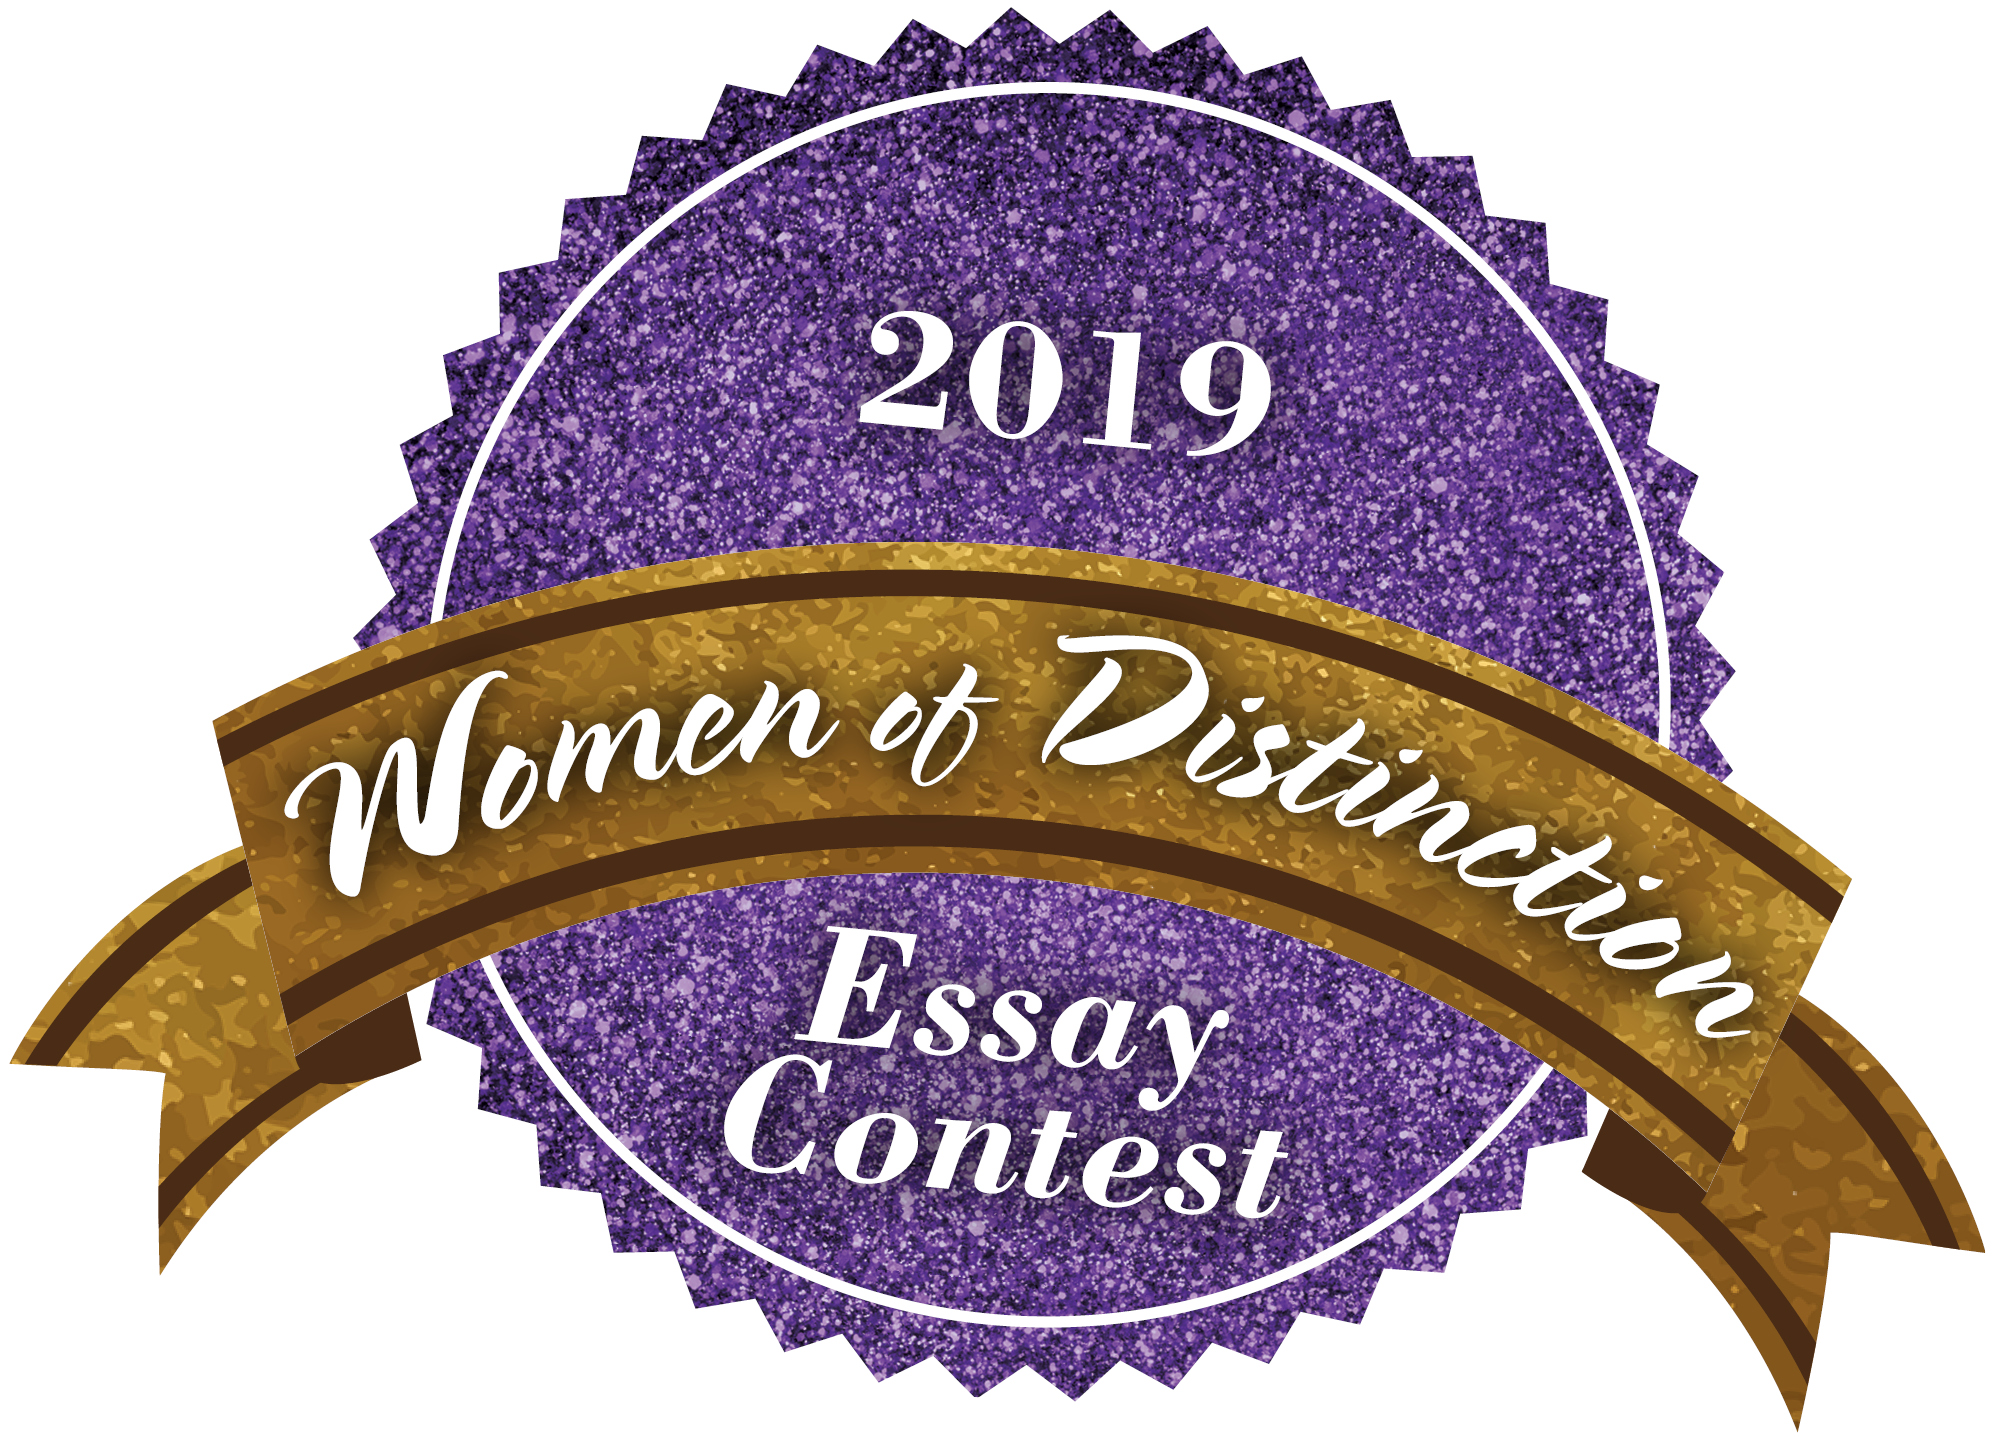 2019 Women of Distinction Essay Contest